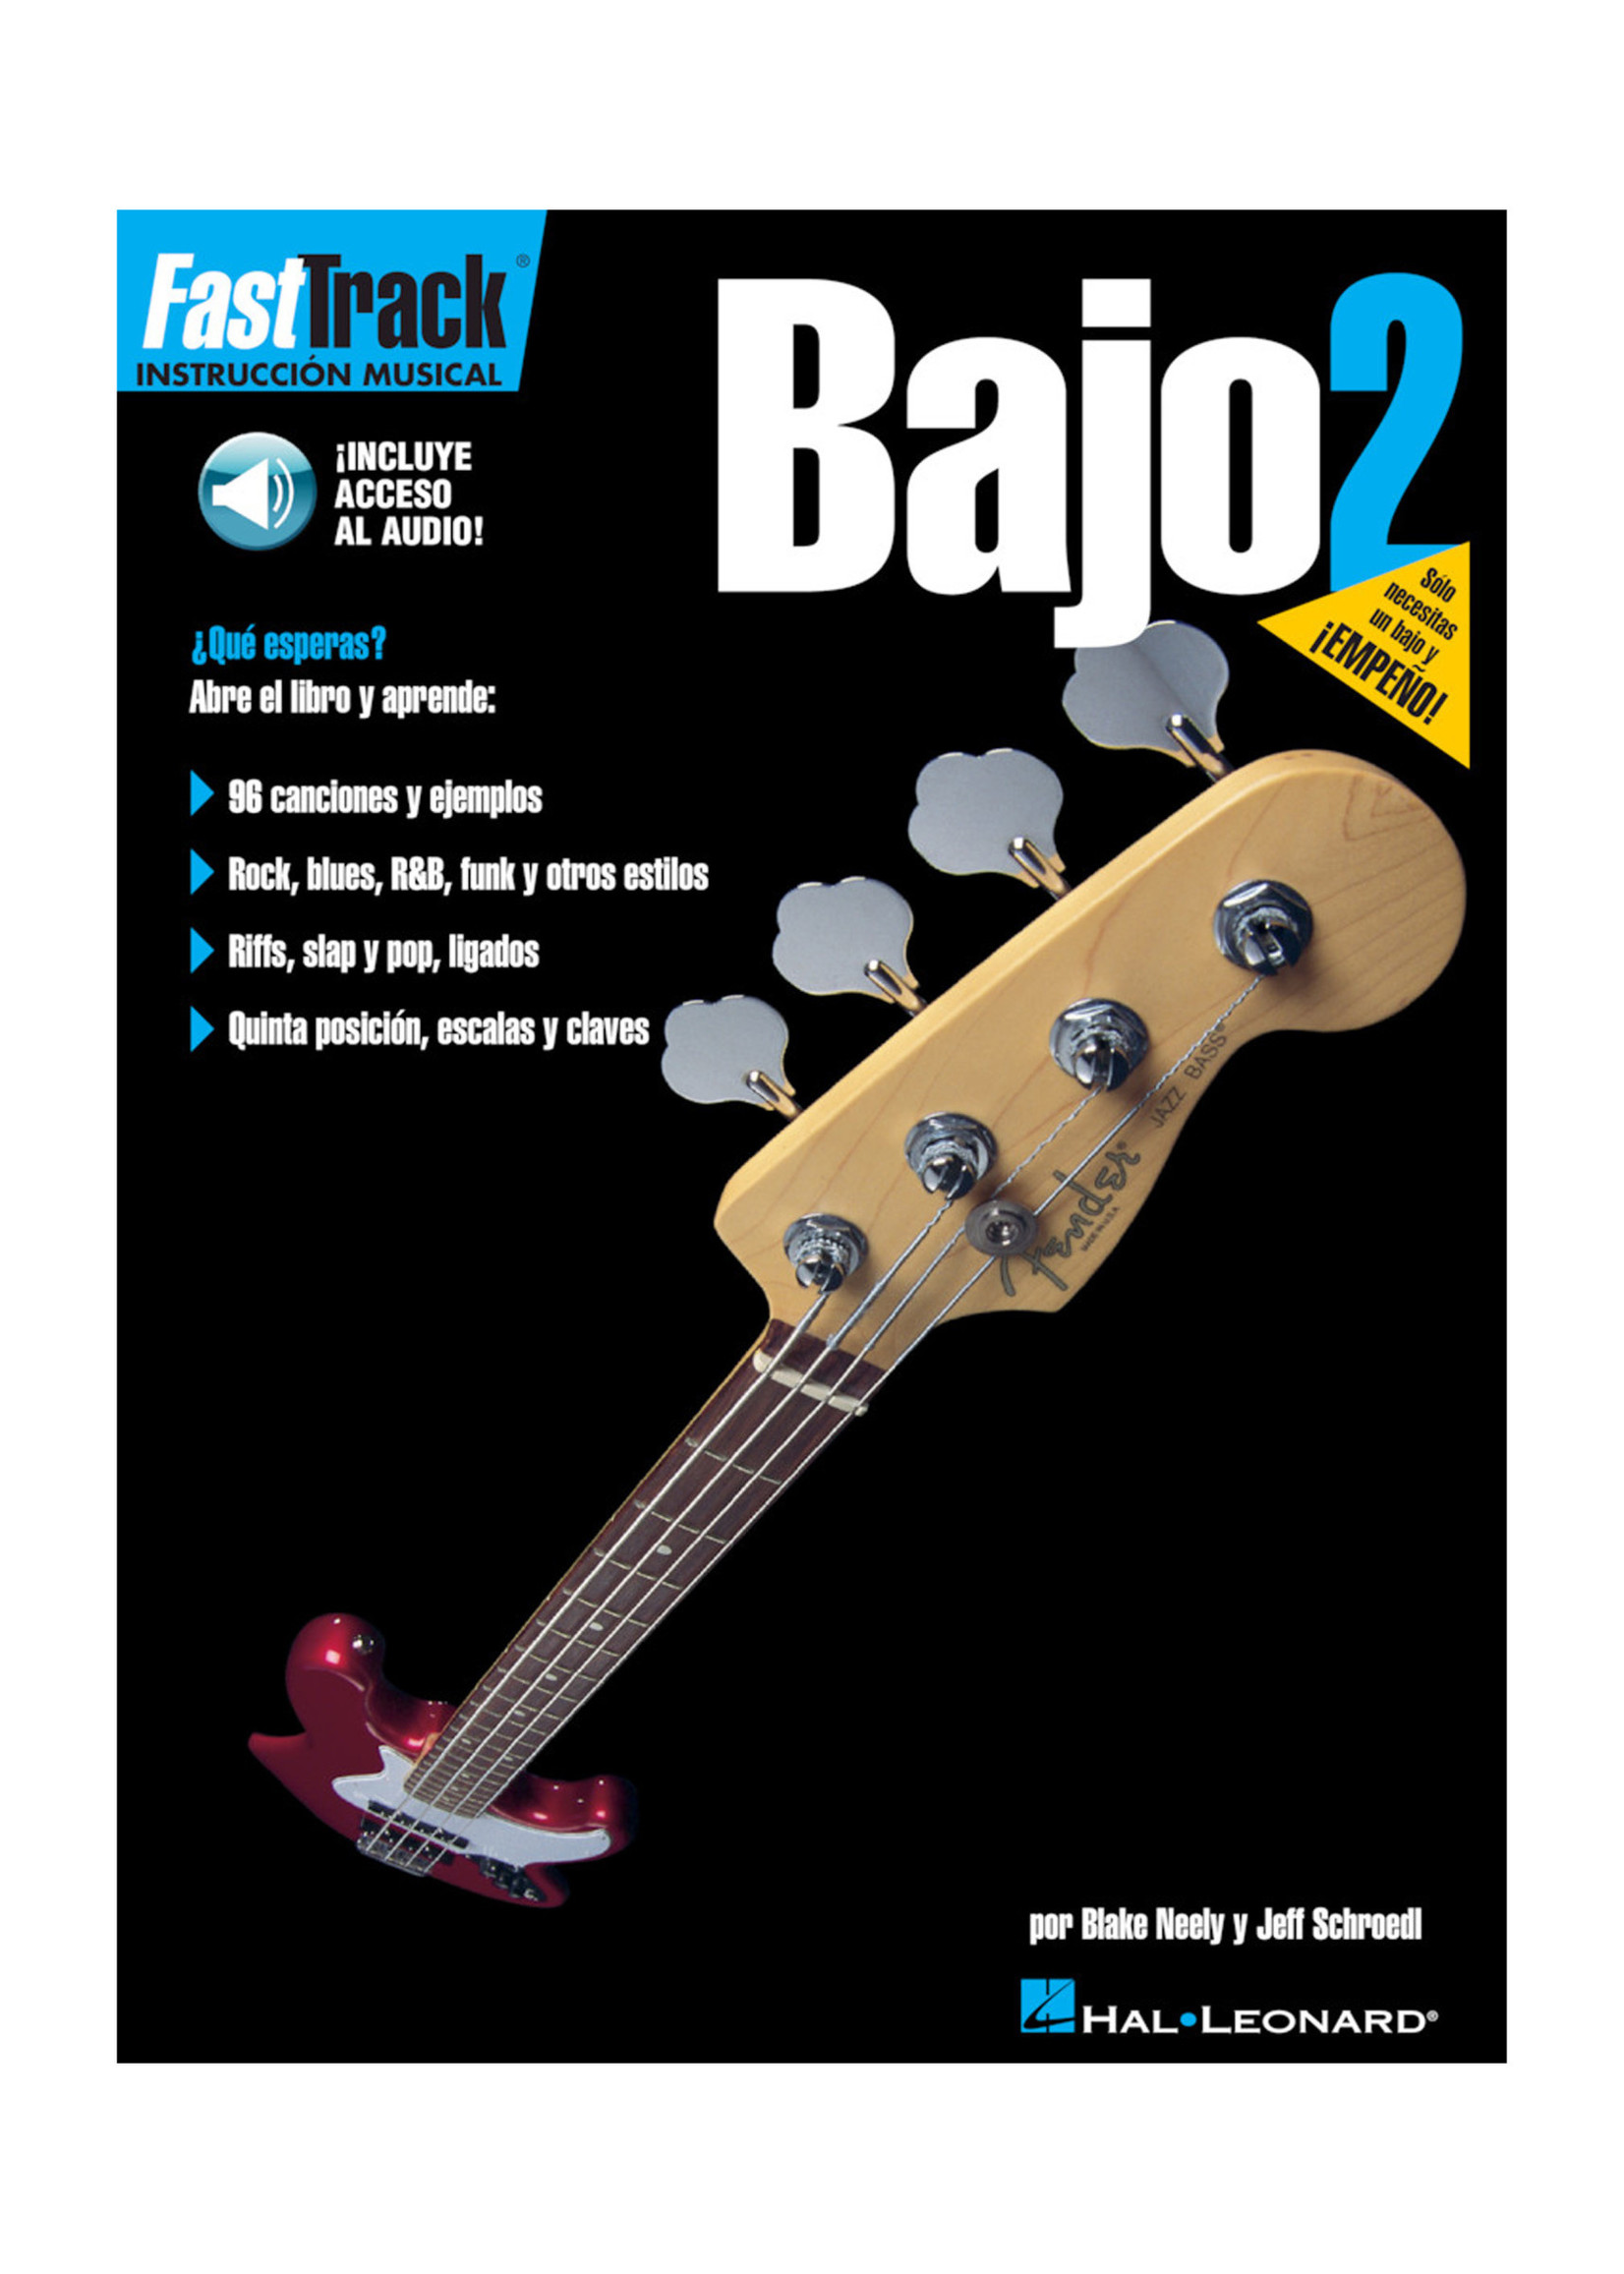 Hal Leonard FastTrack Bass Method 2 – Spanish Edition